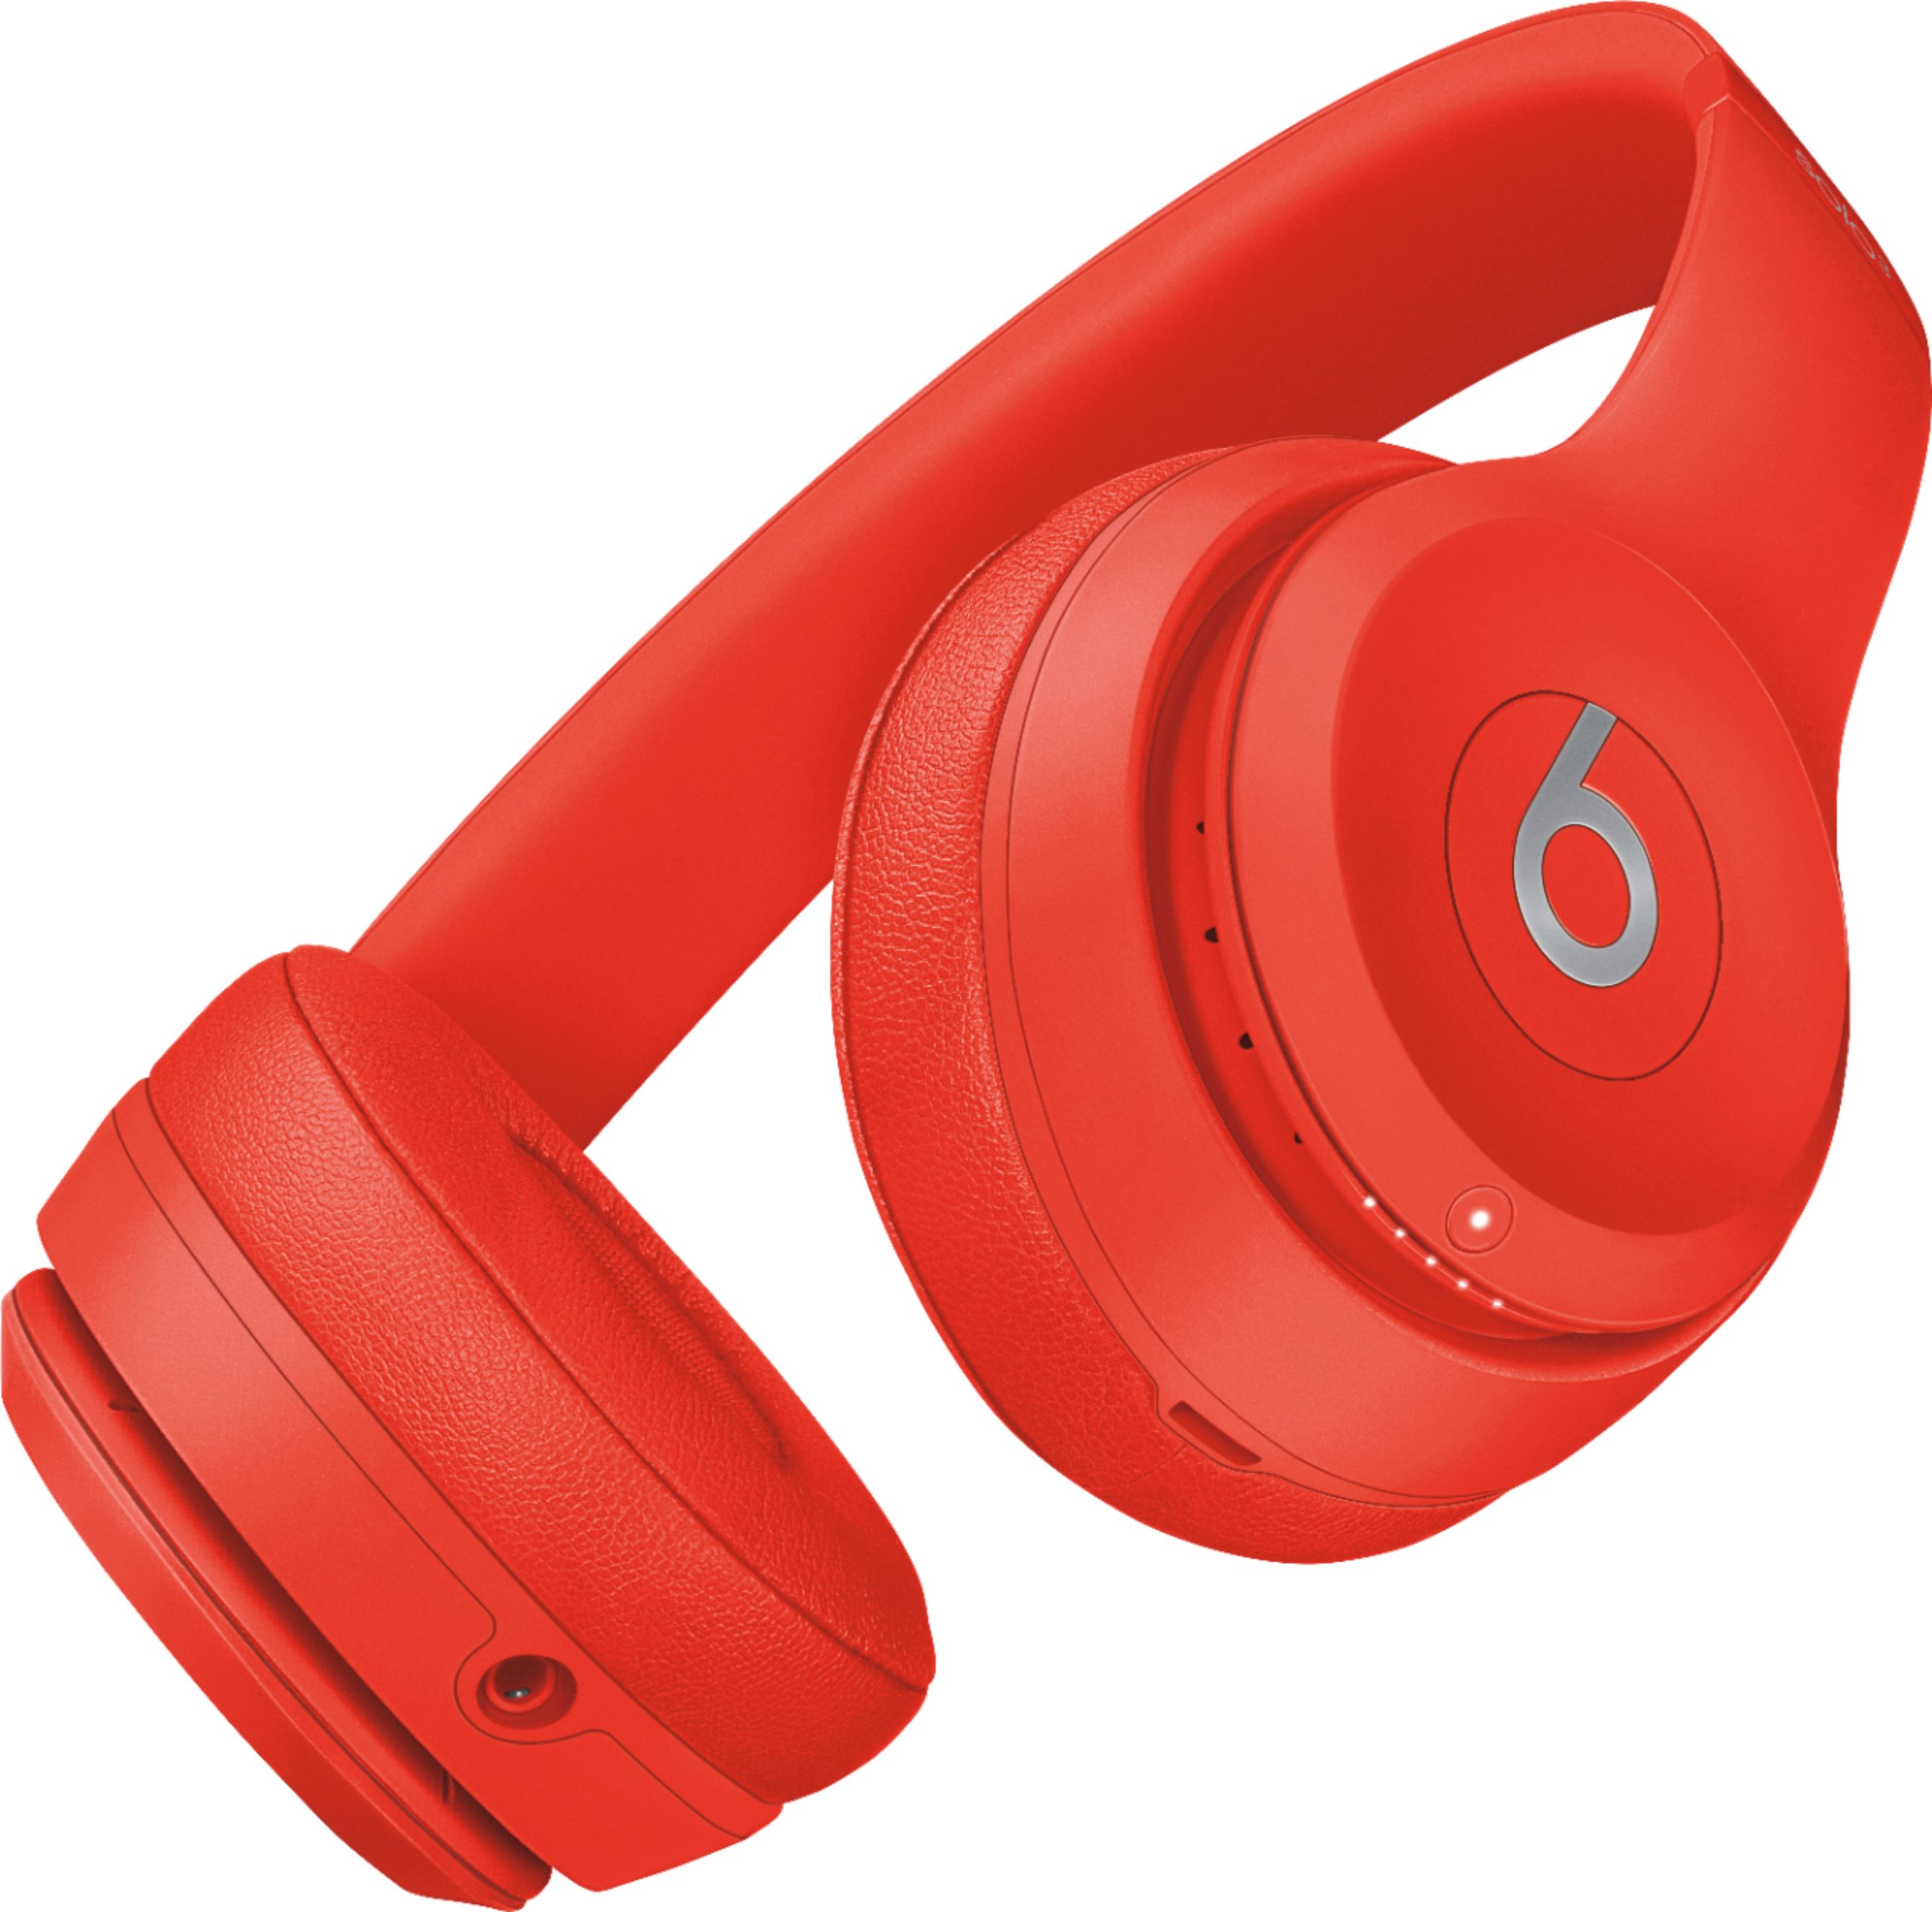 beats by dre wireless headphones red